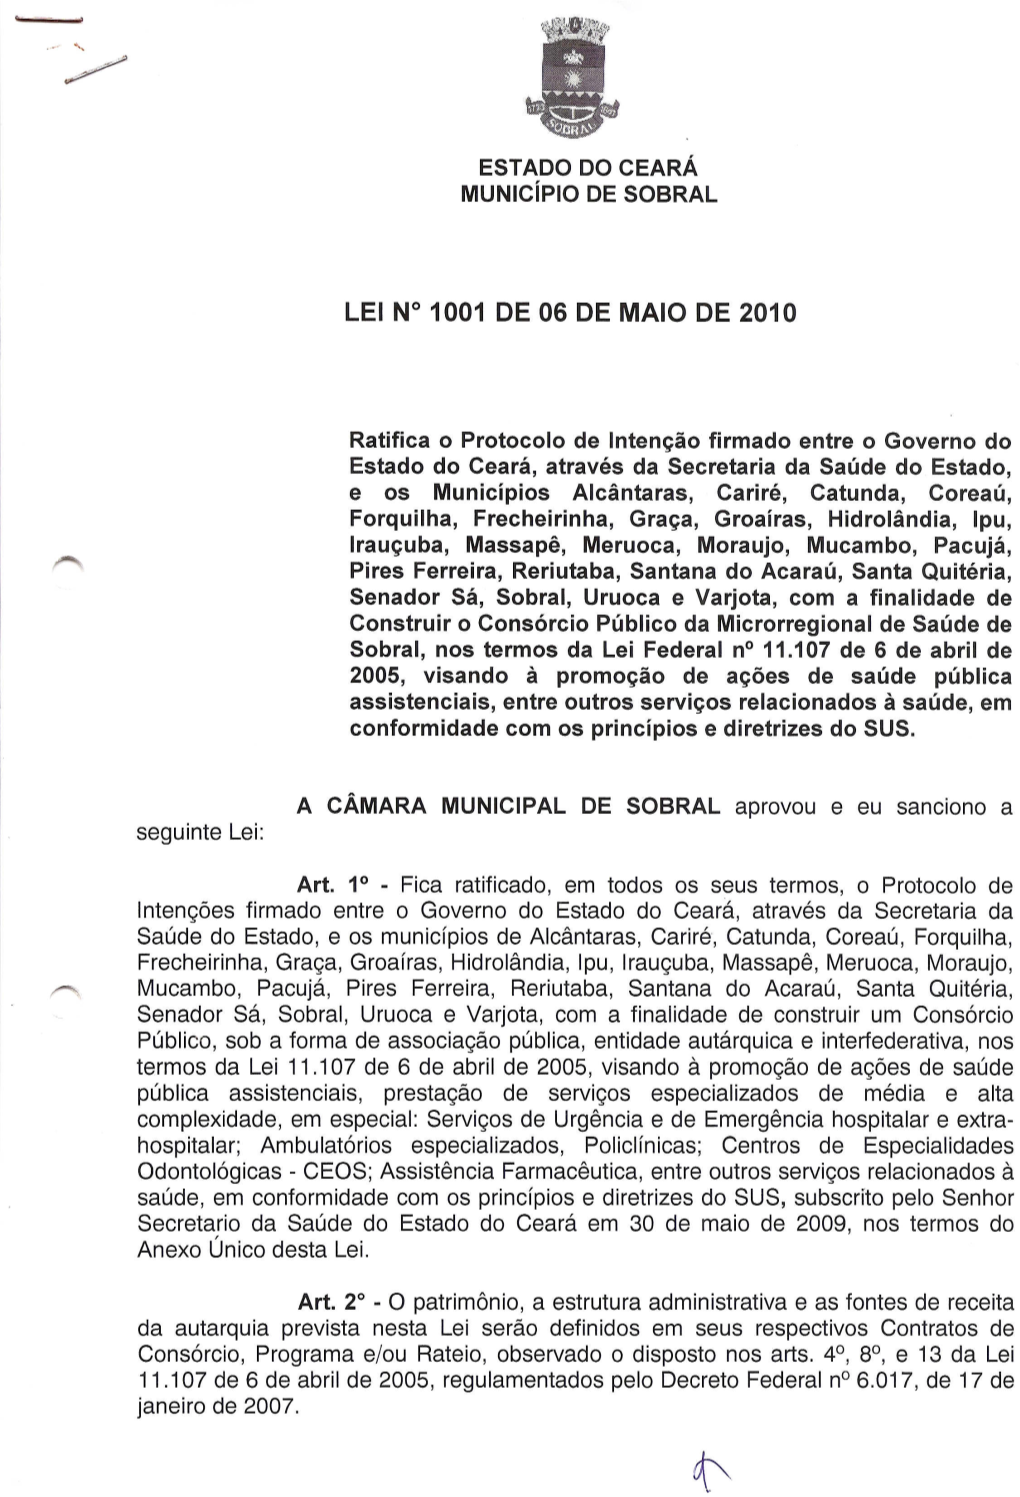 ESTADO DO CEARA Municipio DE SOBRAL Ratifica 0 Protocolo De